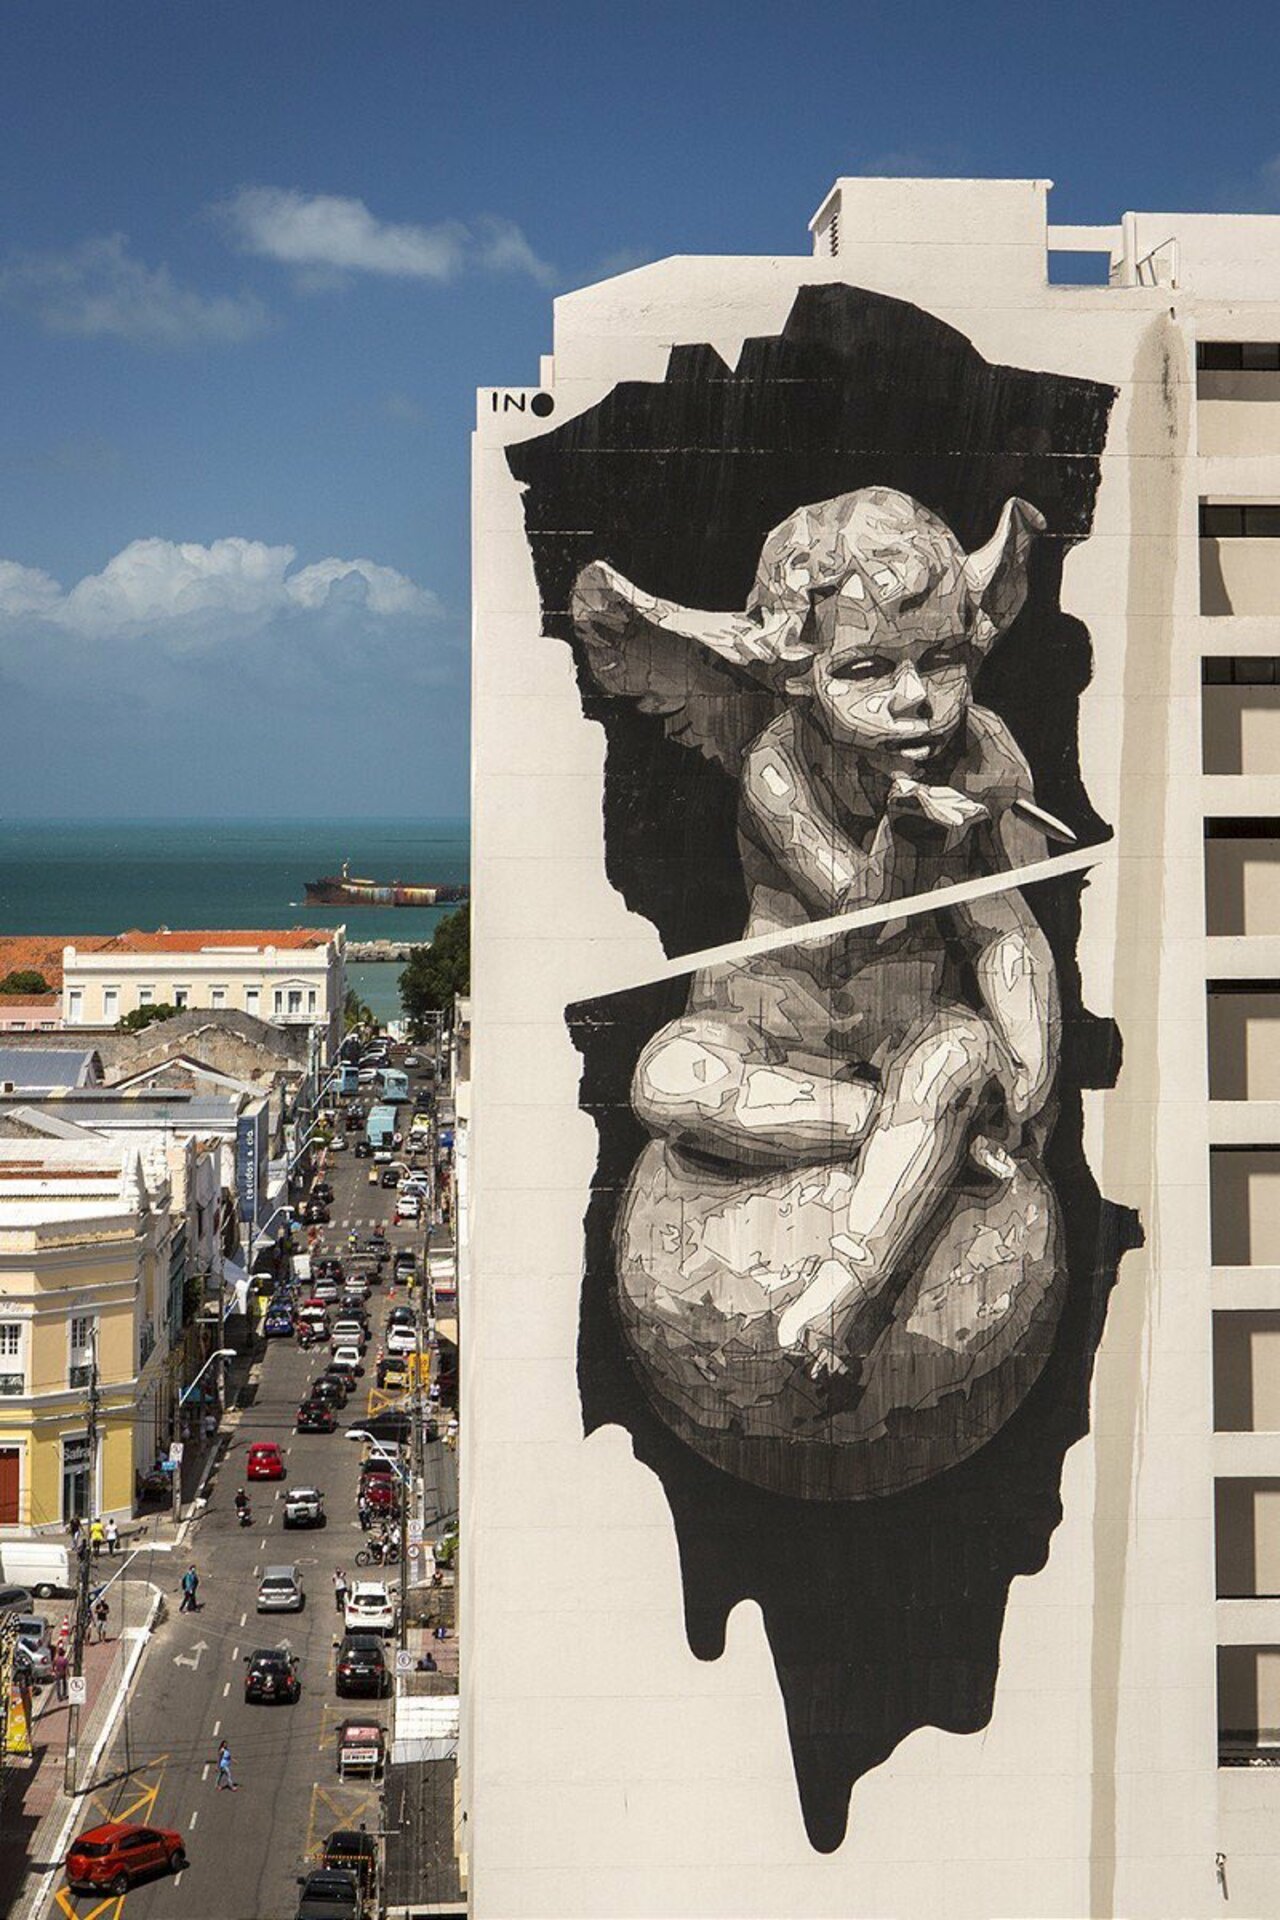 #mural by INO #Fortaleza #Brazil #streetart #art #urbanart #graffiti https://t.co/uG7gIbbsQ0